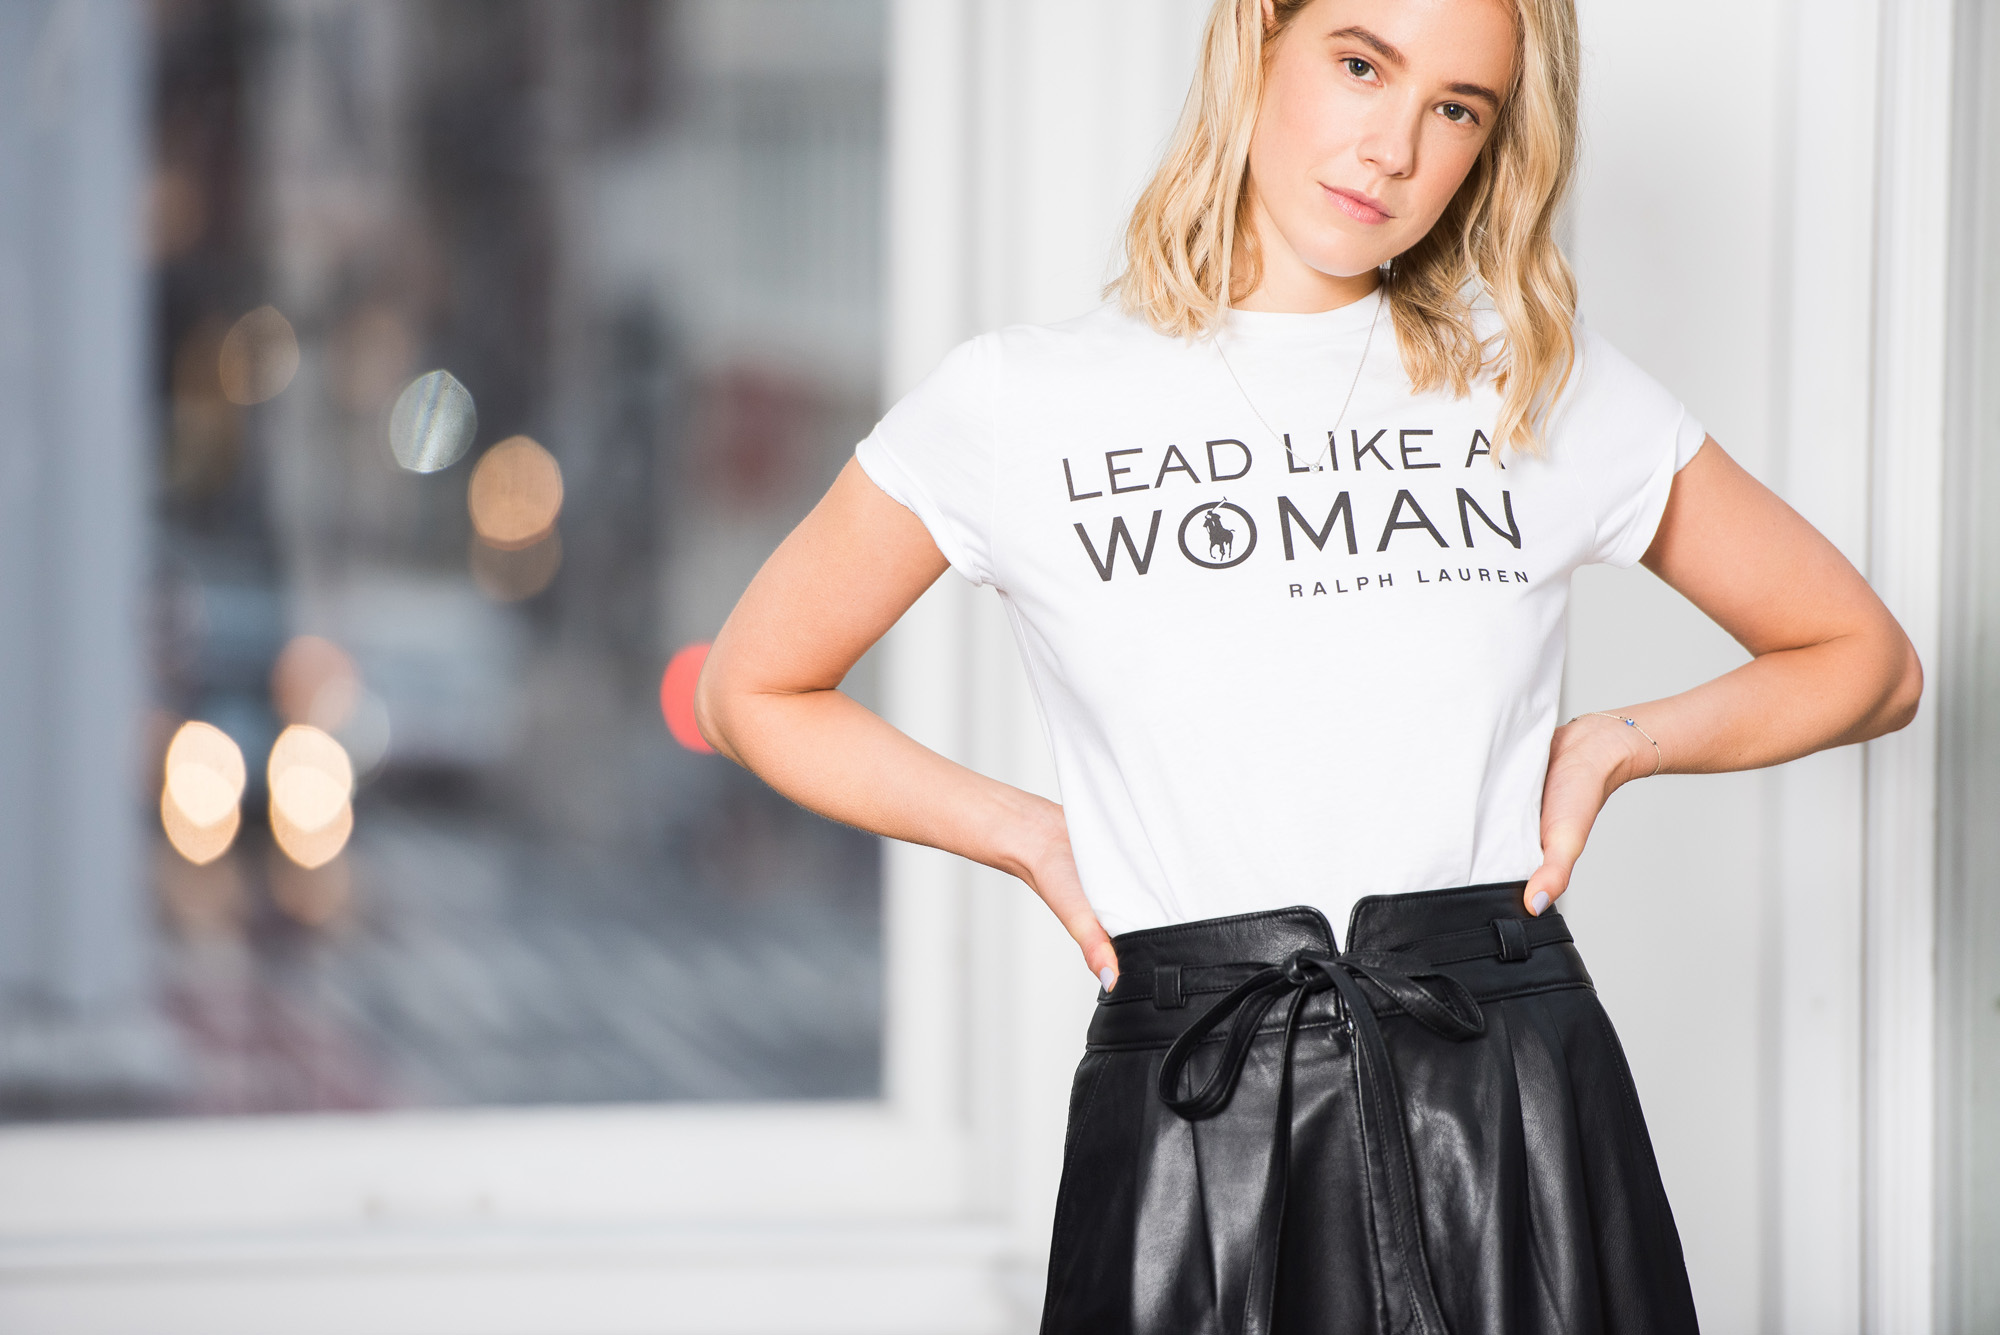 lead like a woman ralph lauren t shirt